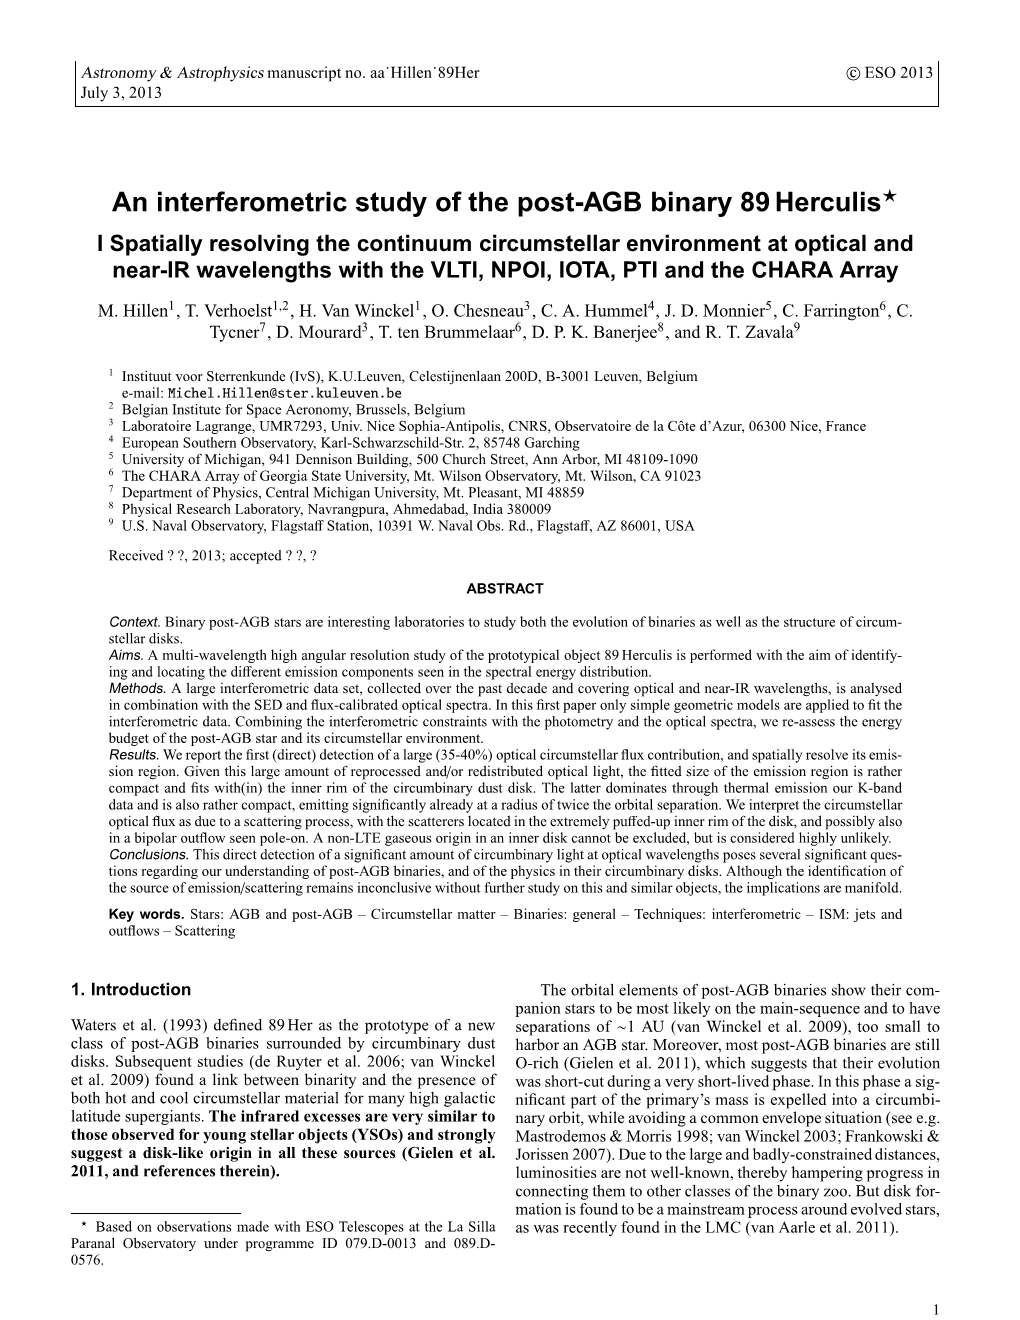 An Interferometric Study of the Post-AGB Binary 89 Herculis⋆